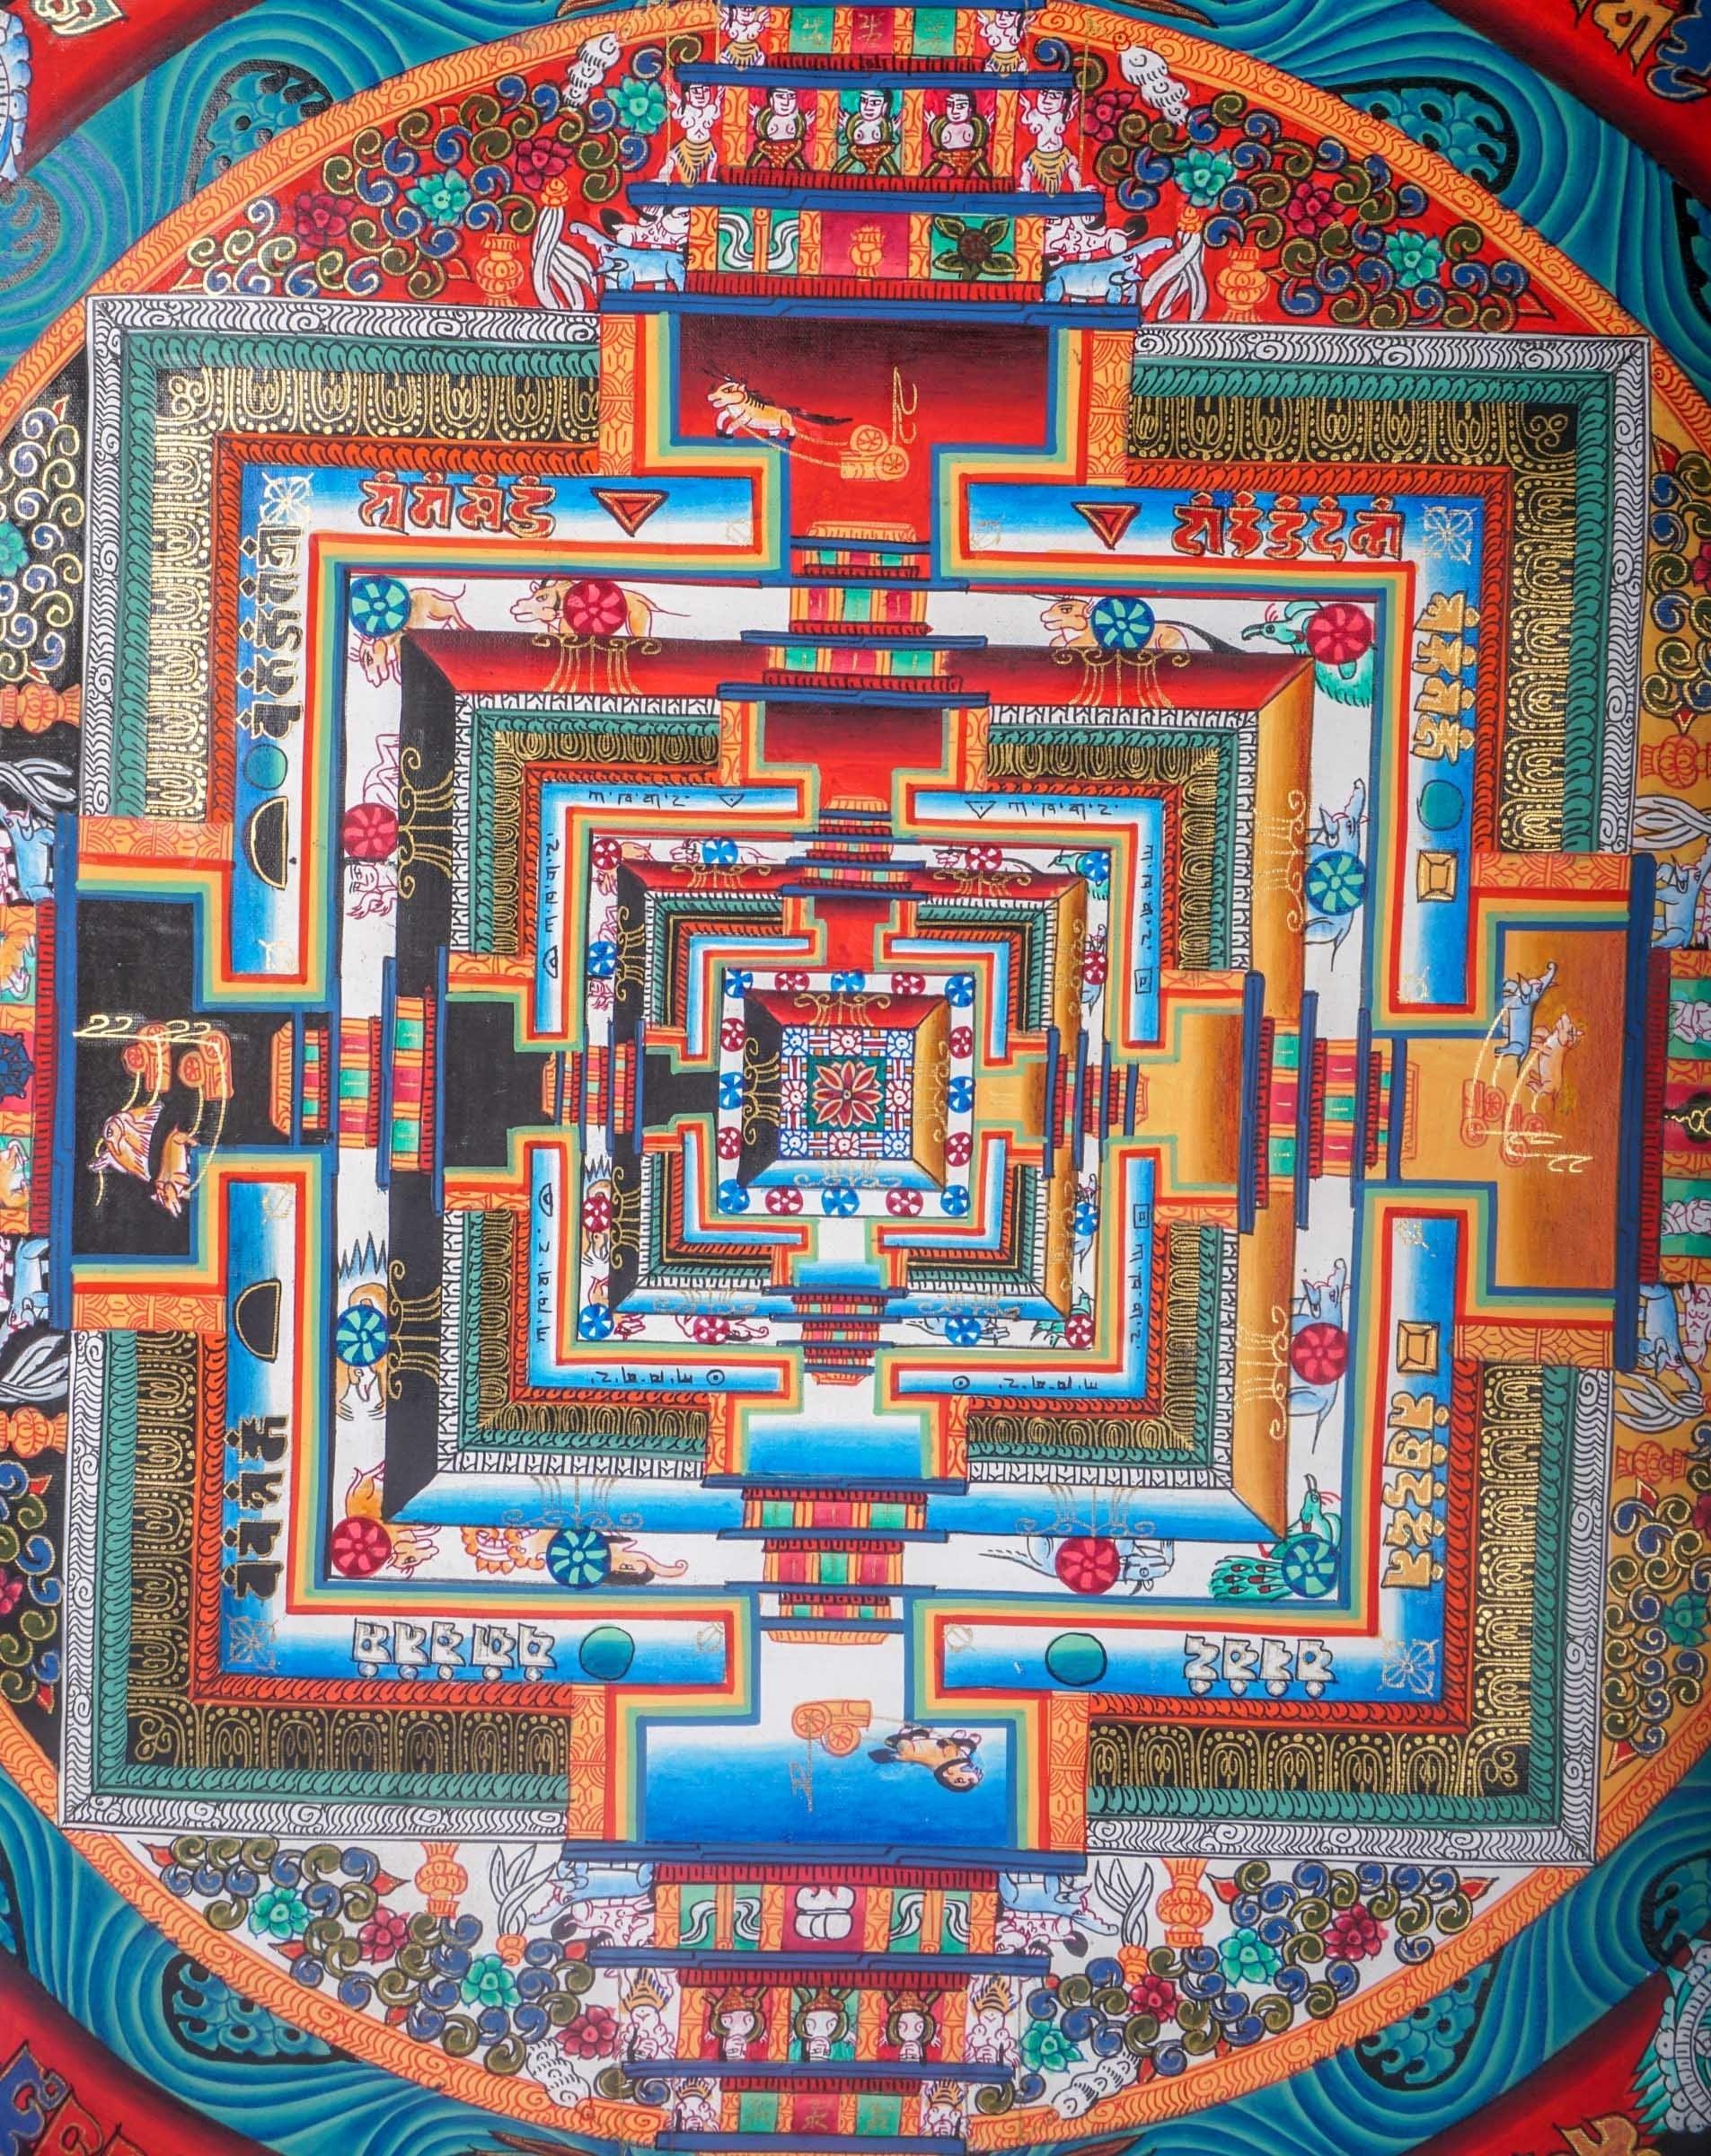 Kalchakra Mandala Painting - Himalayas Shop